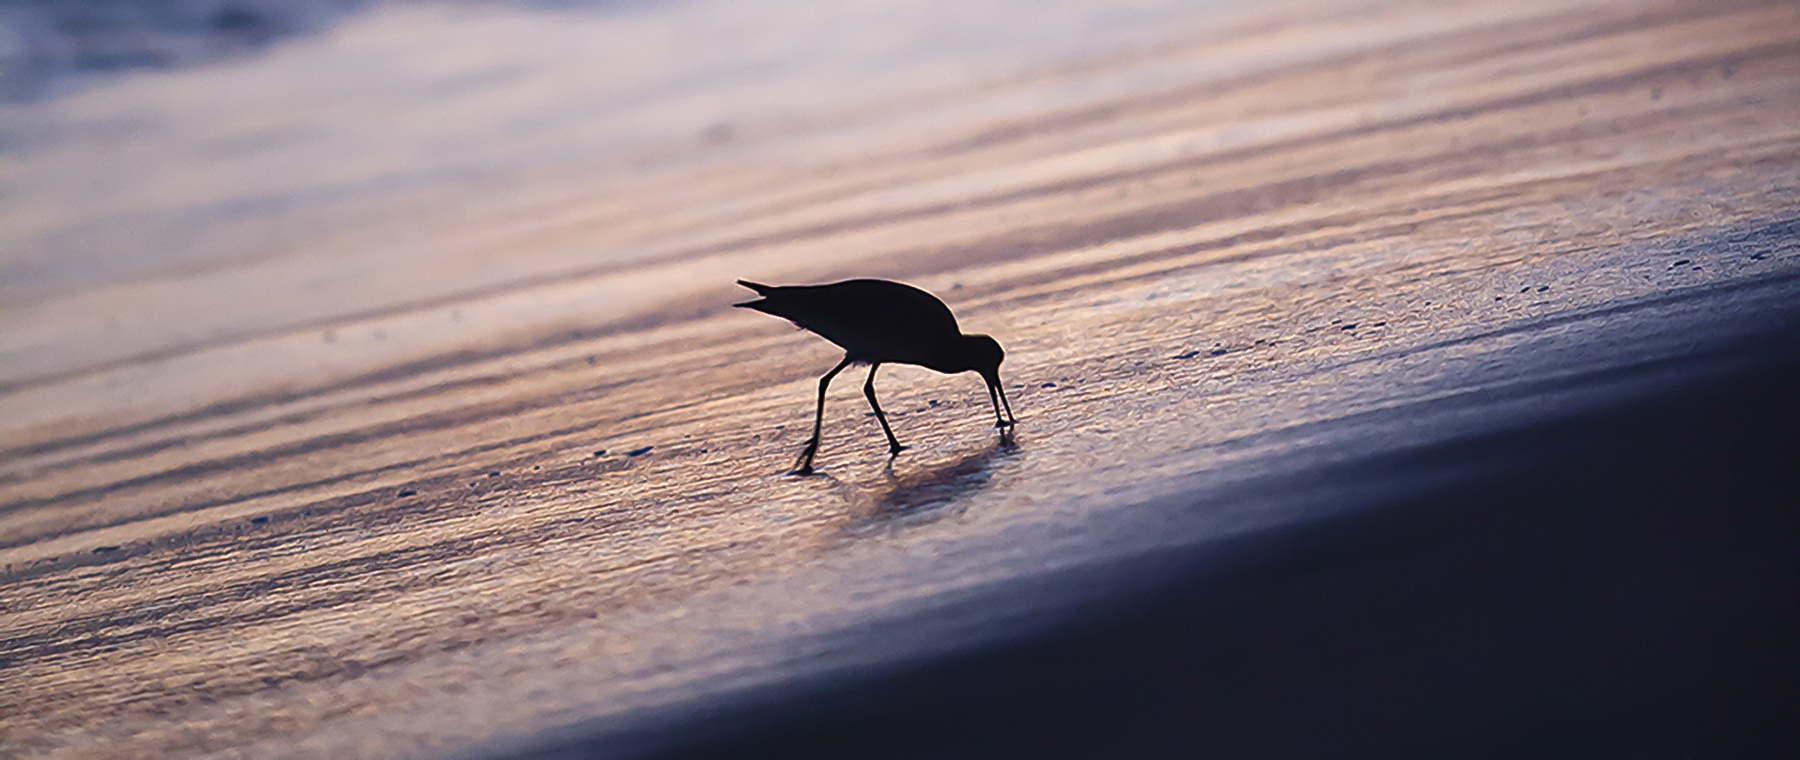 bird picking through sand at the beach